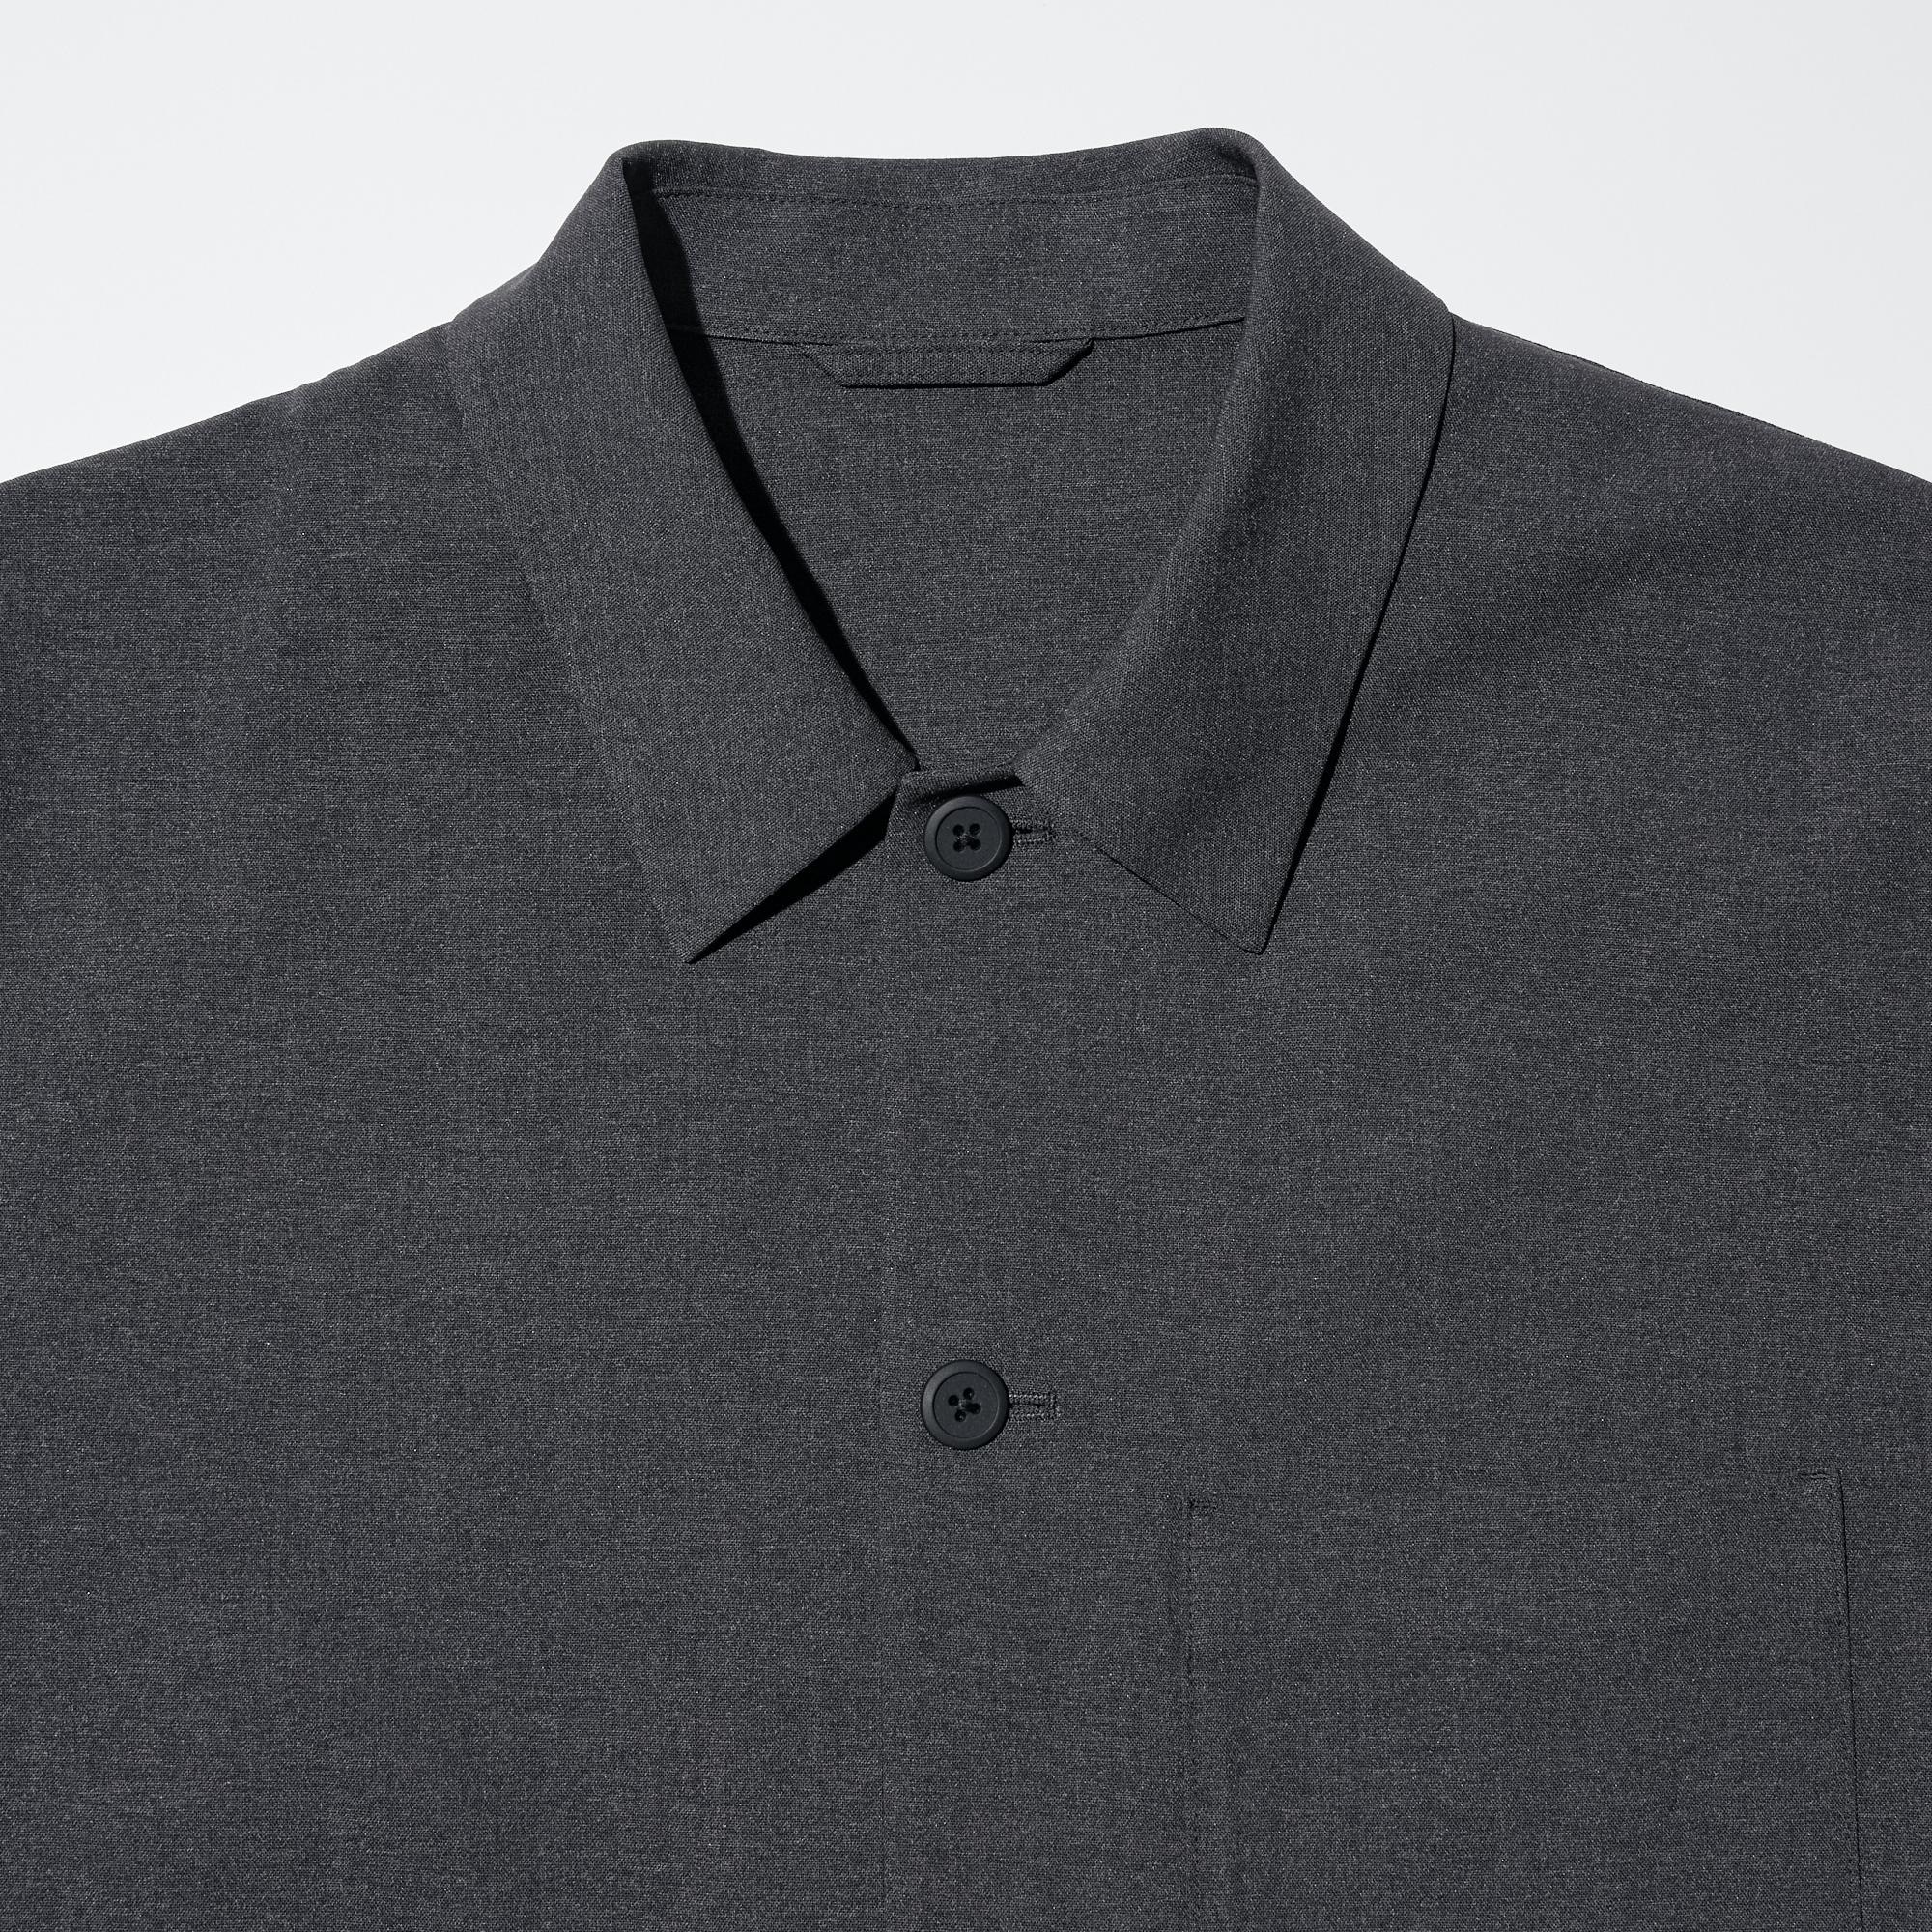 AirSense Shirt Jacket (Wool-Like)